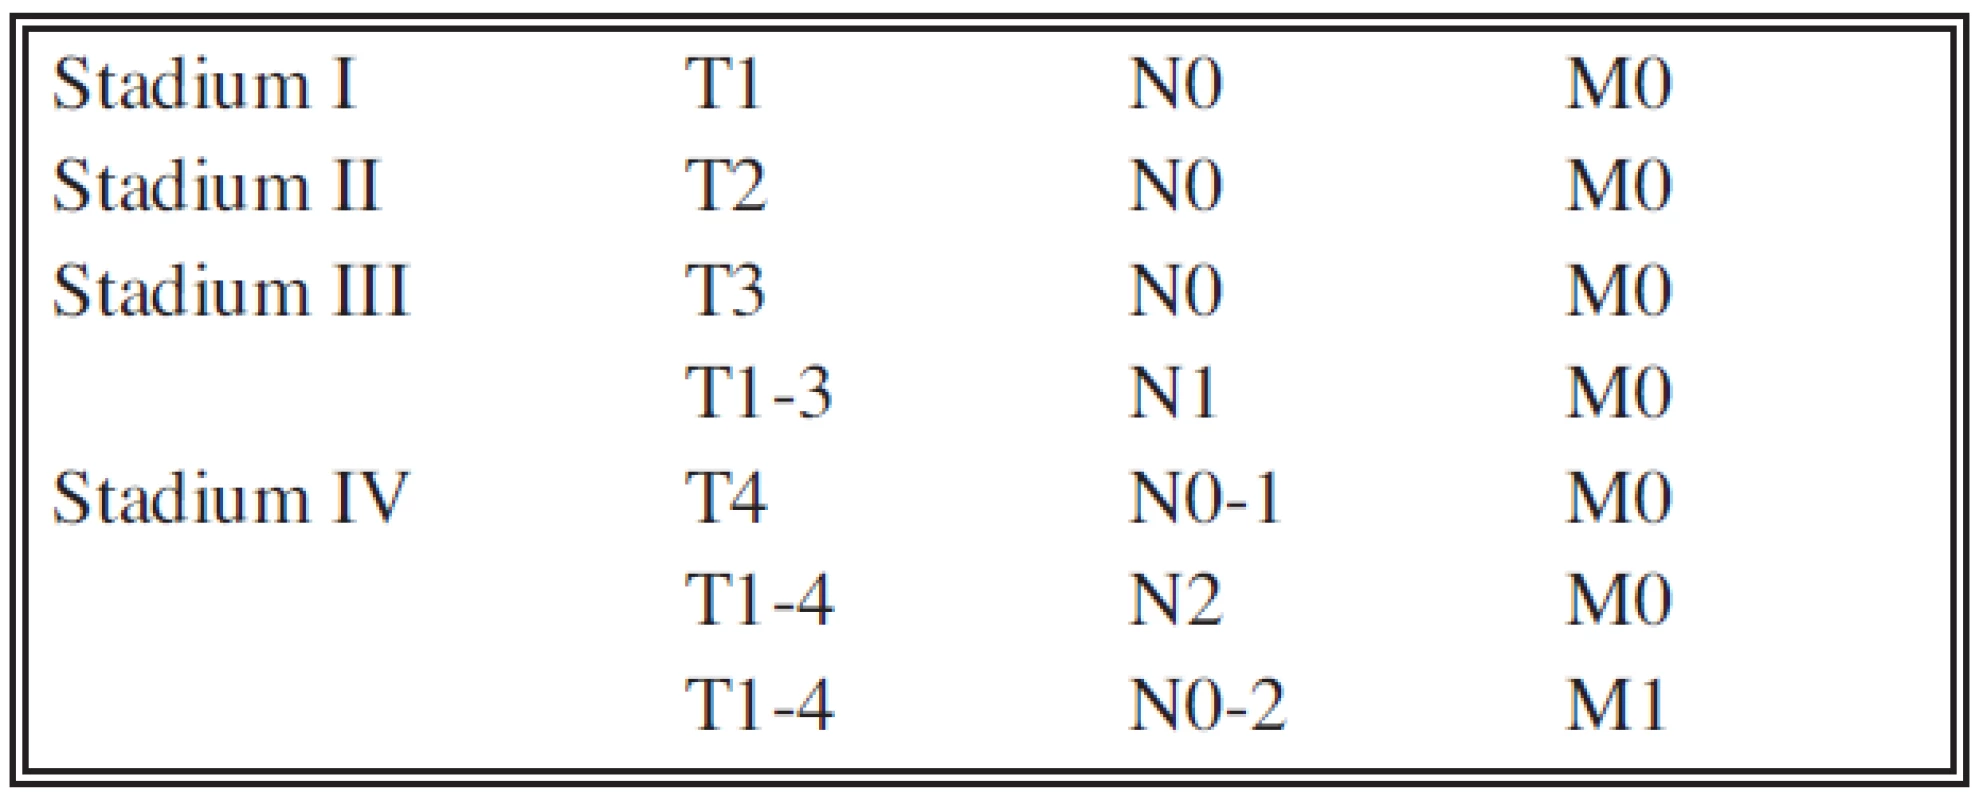 Klinické stadium renálního karcinomu podle TNM
Tab. 2. Clinical stage of a renal Carcinoma according to the TNM classification